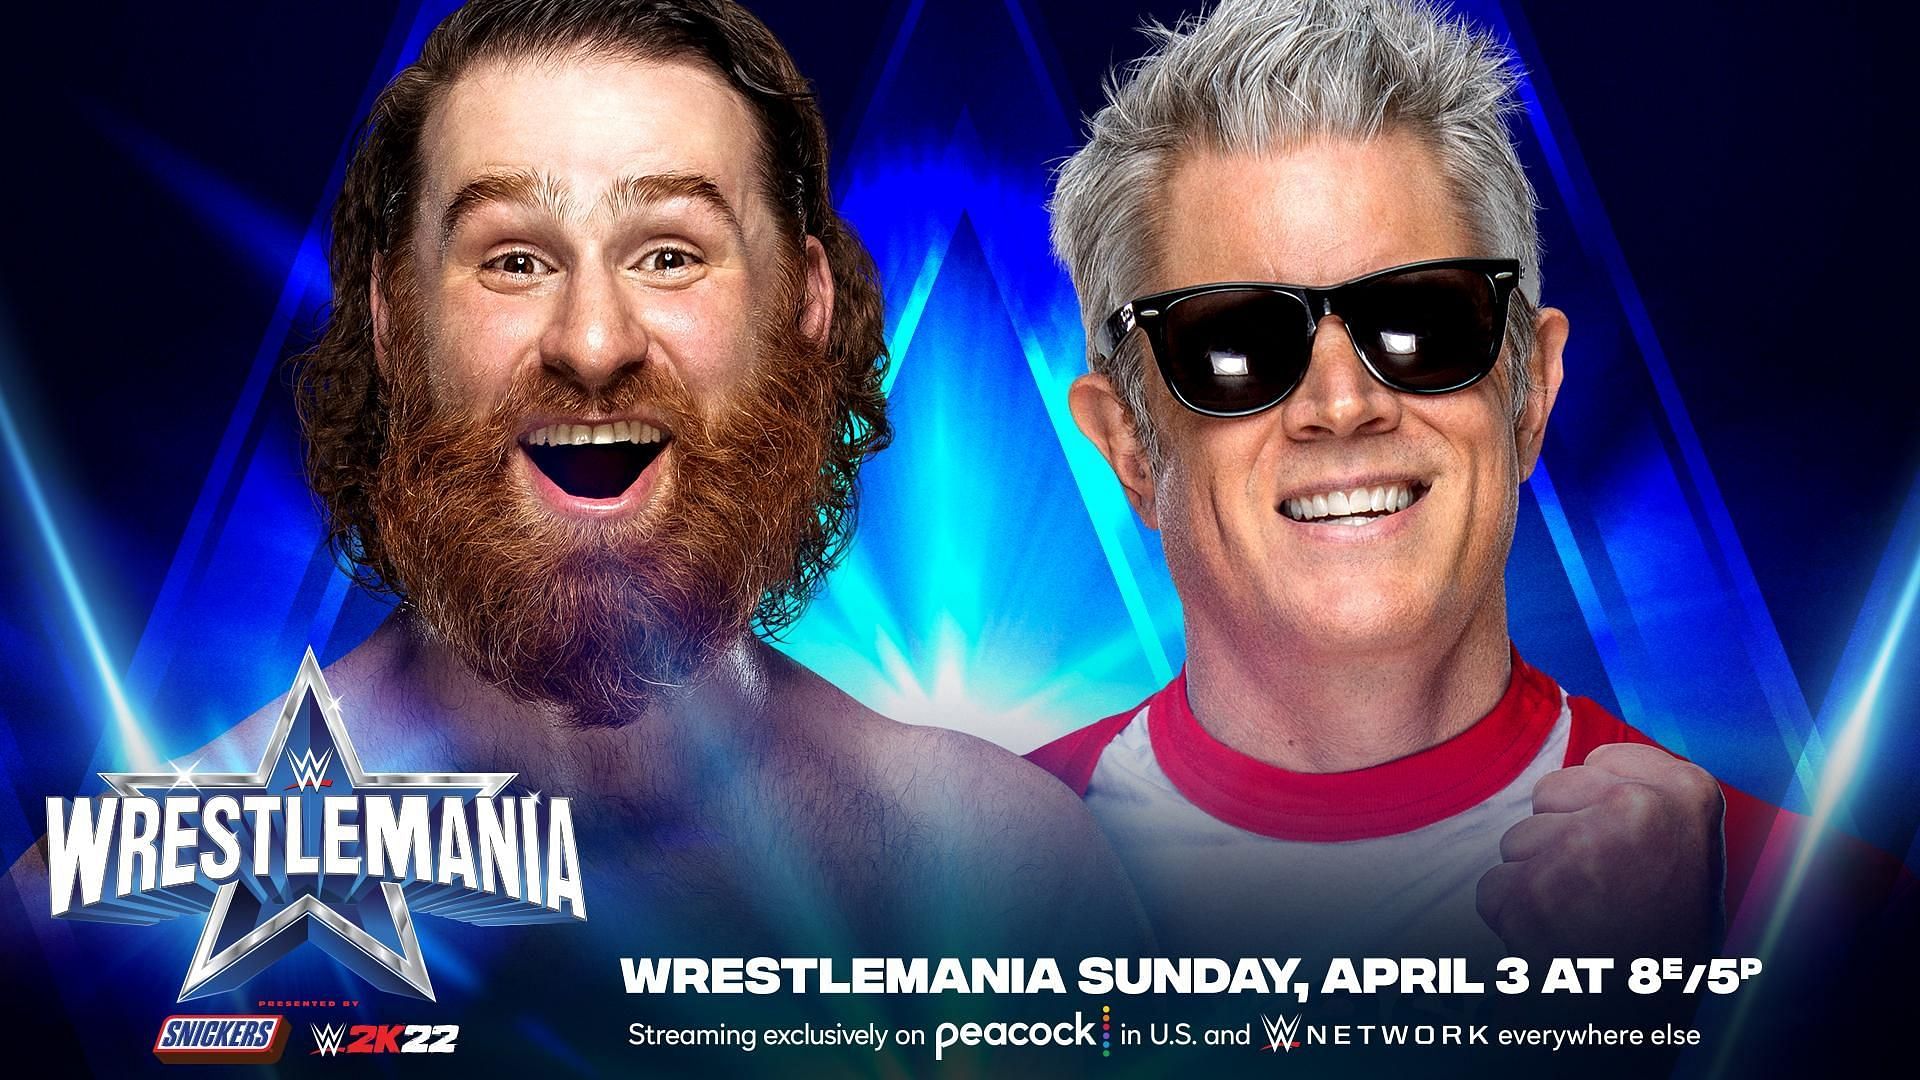 Sami Zayn will face Johnny Knoxville at WrestleMania 38